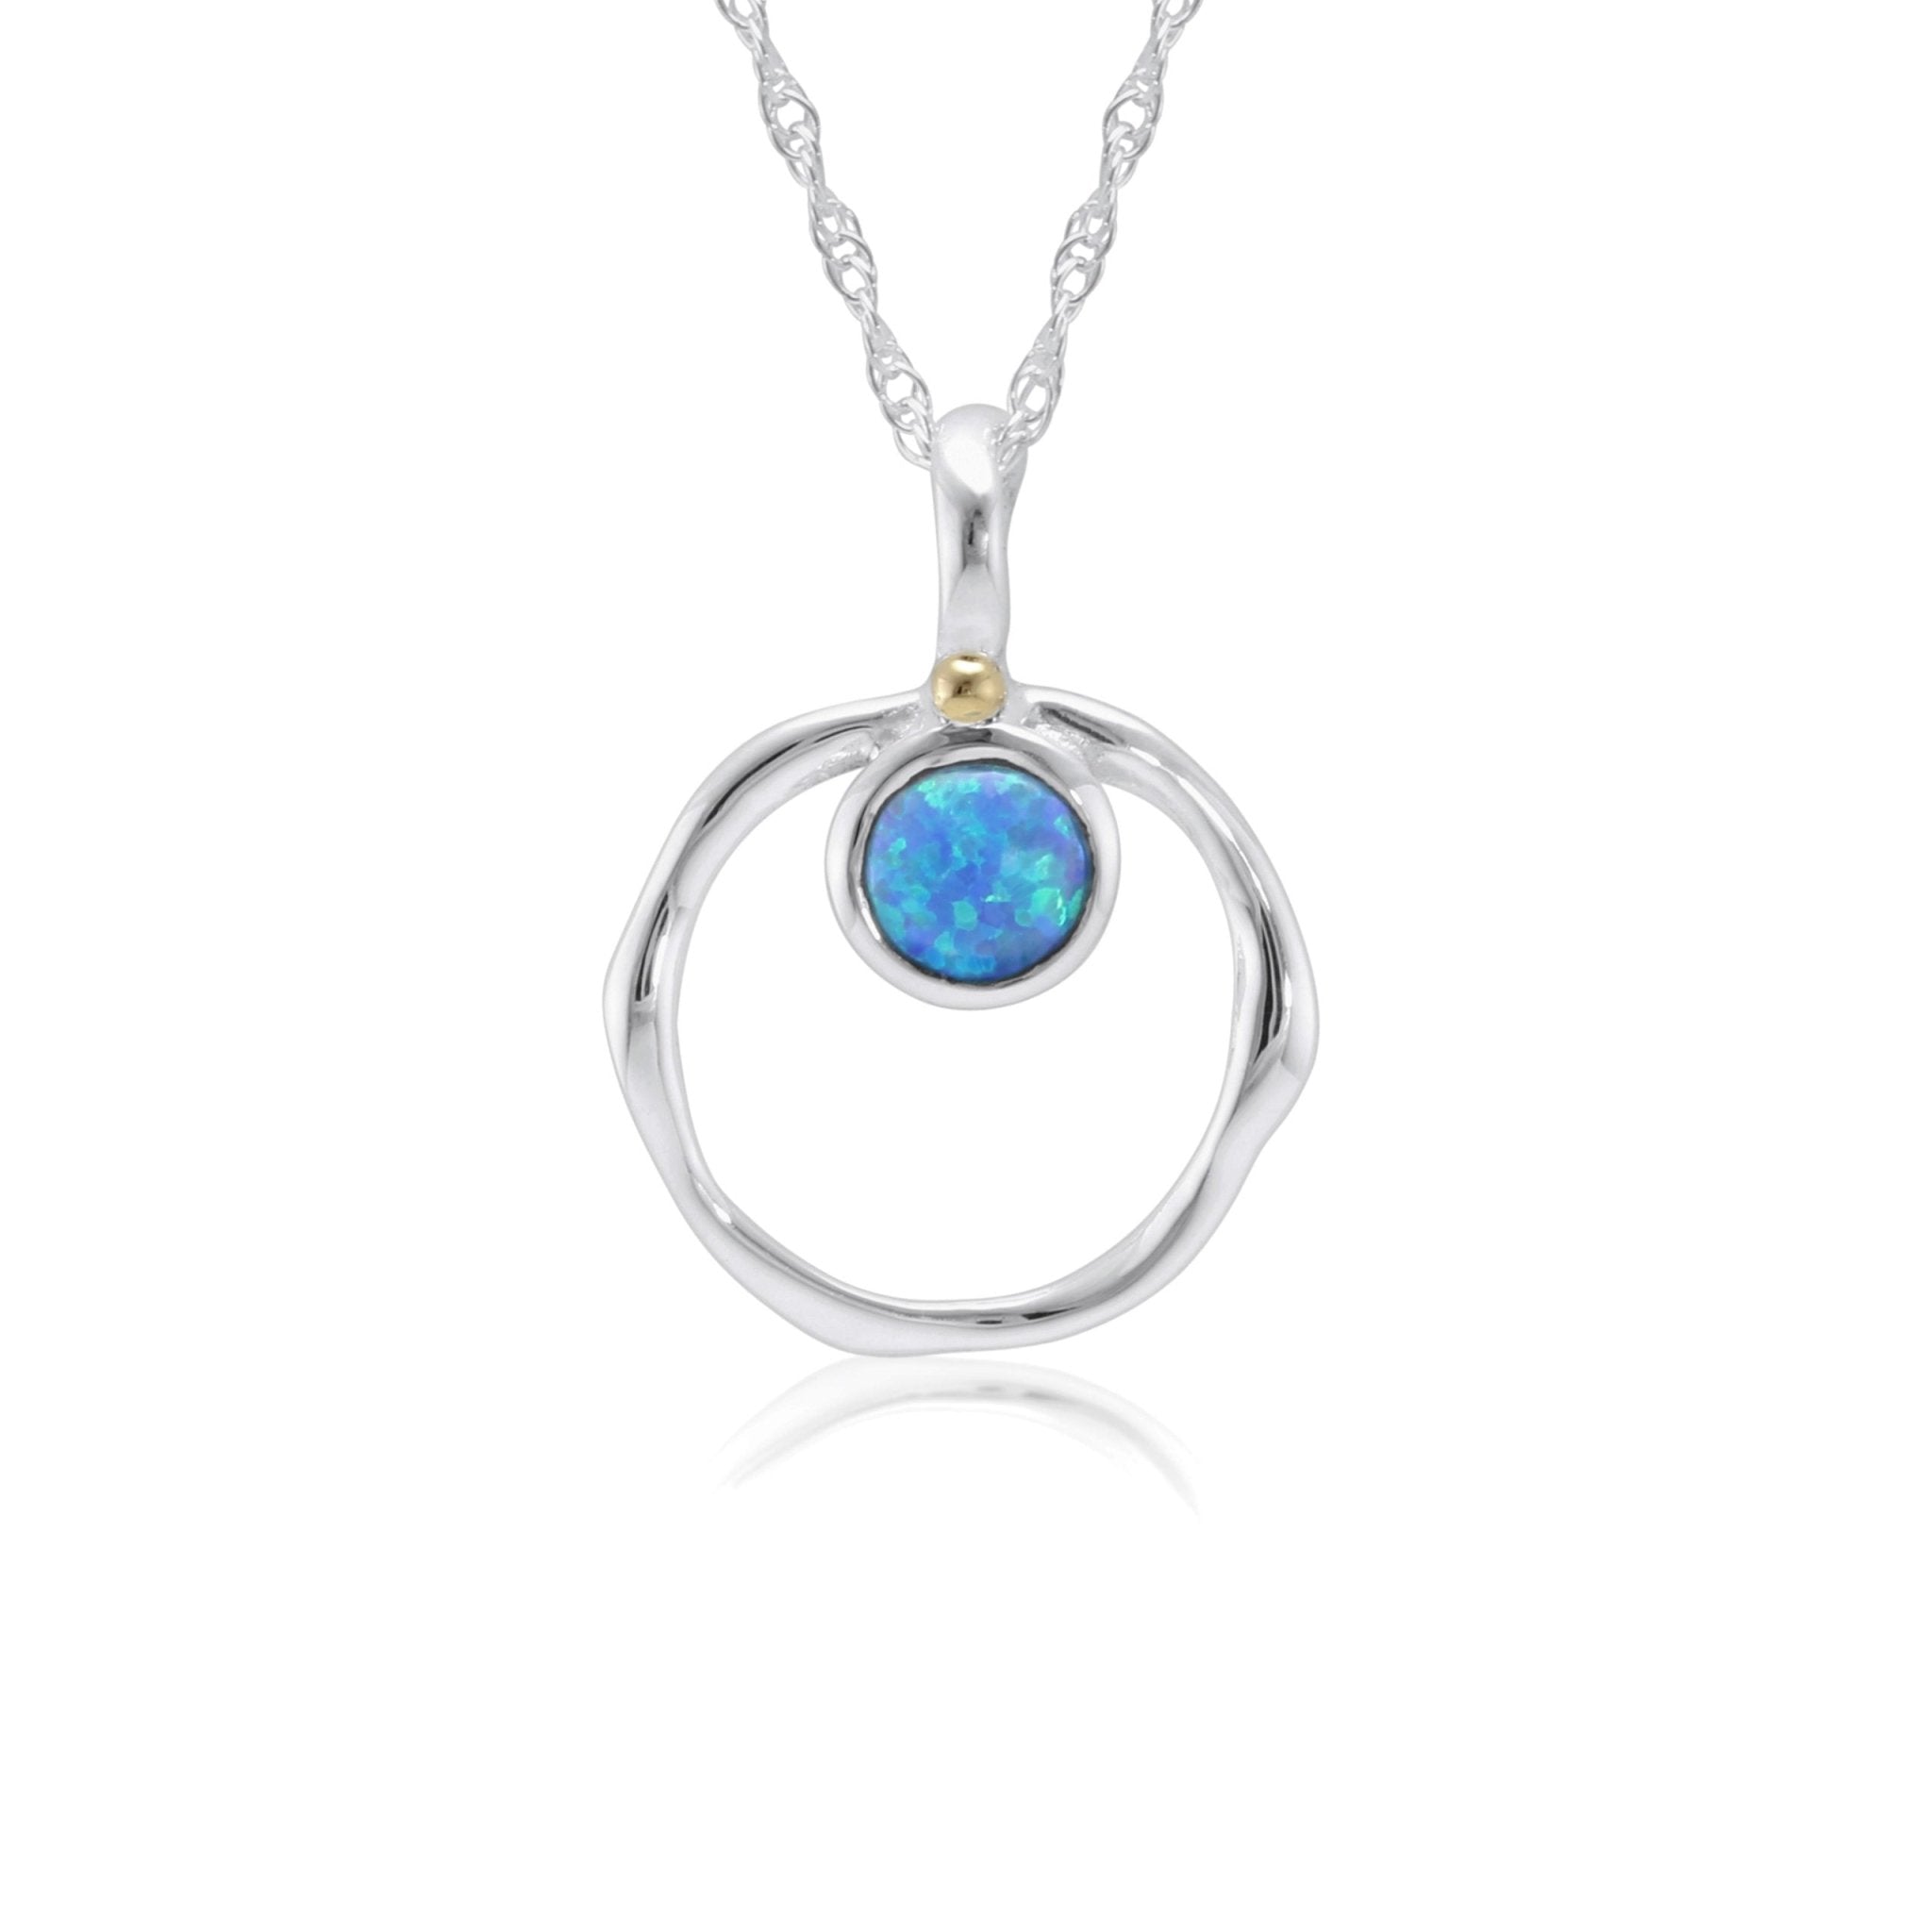 Organic Opal Necklace - The Nancy Smillie Shop - Art, Jewellery & Designer Gifts Glasgow